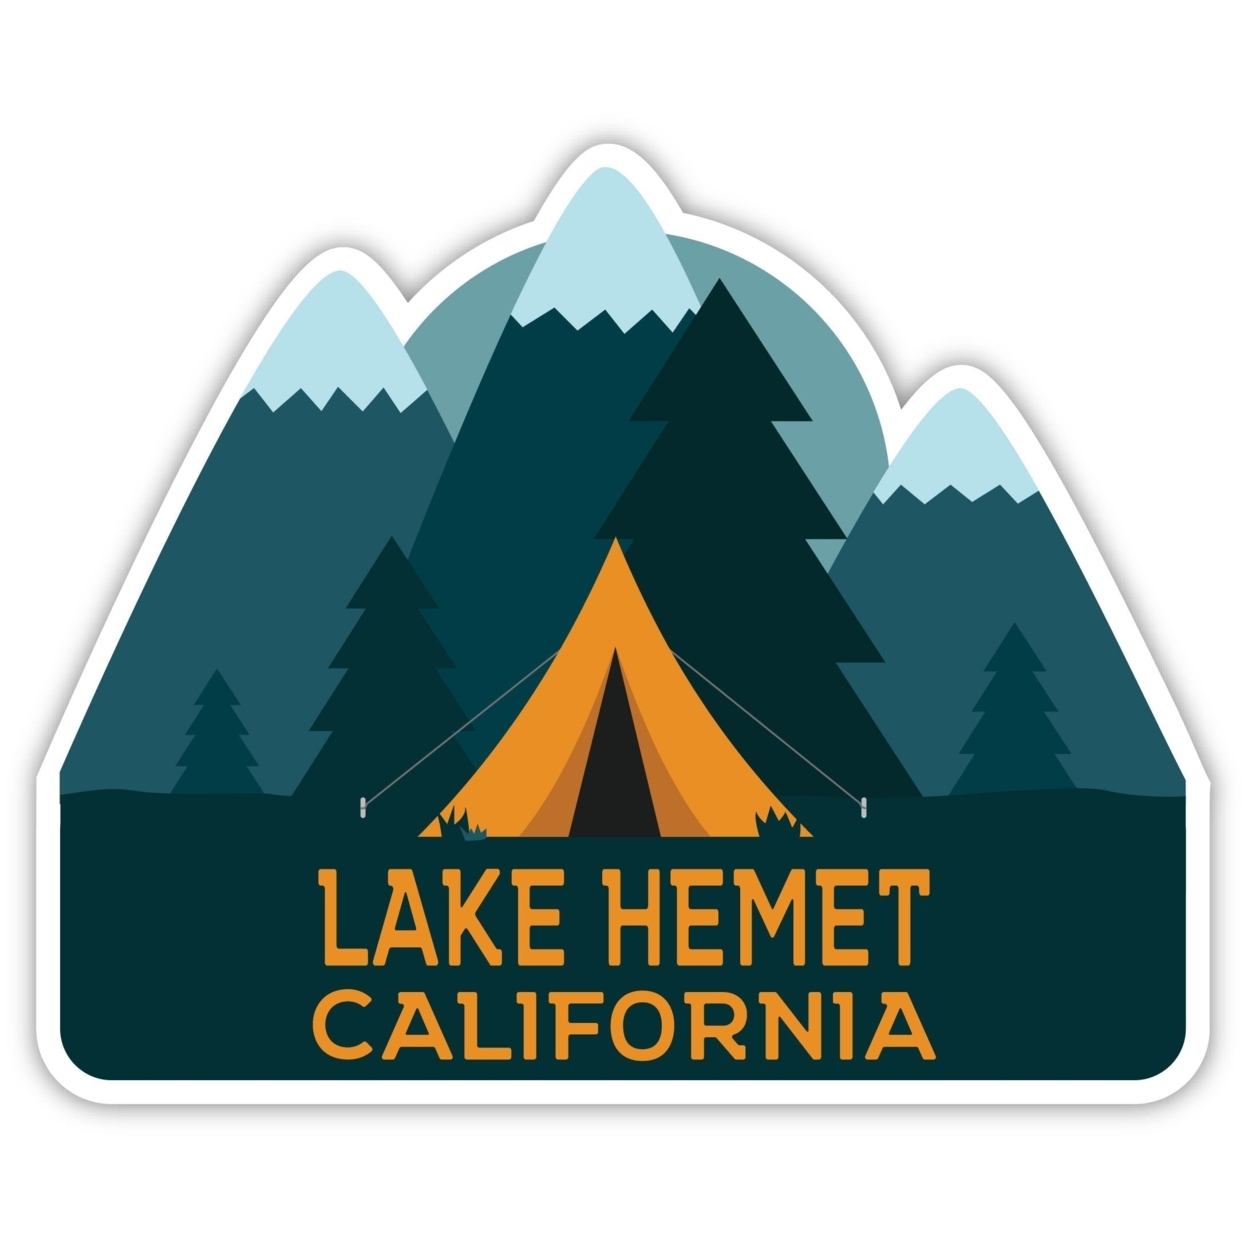 Lake Hemet California Souvenir Decorative Stickers (Choose Theme And Size) - 2-Inch, Camp Life